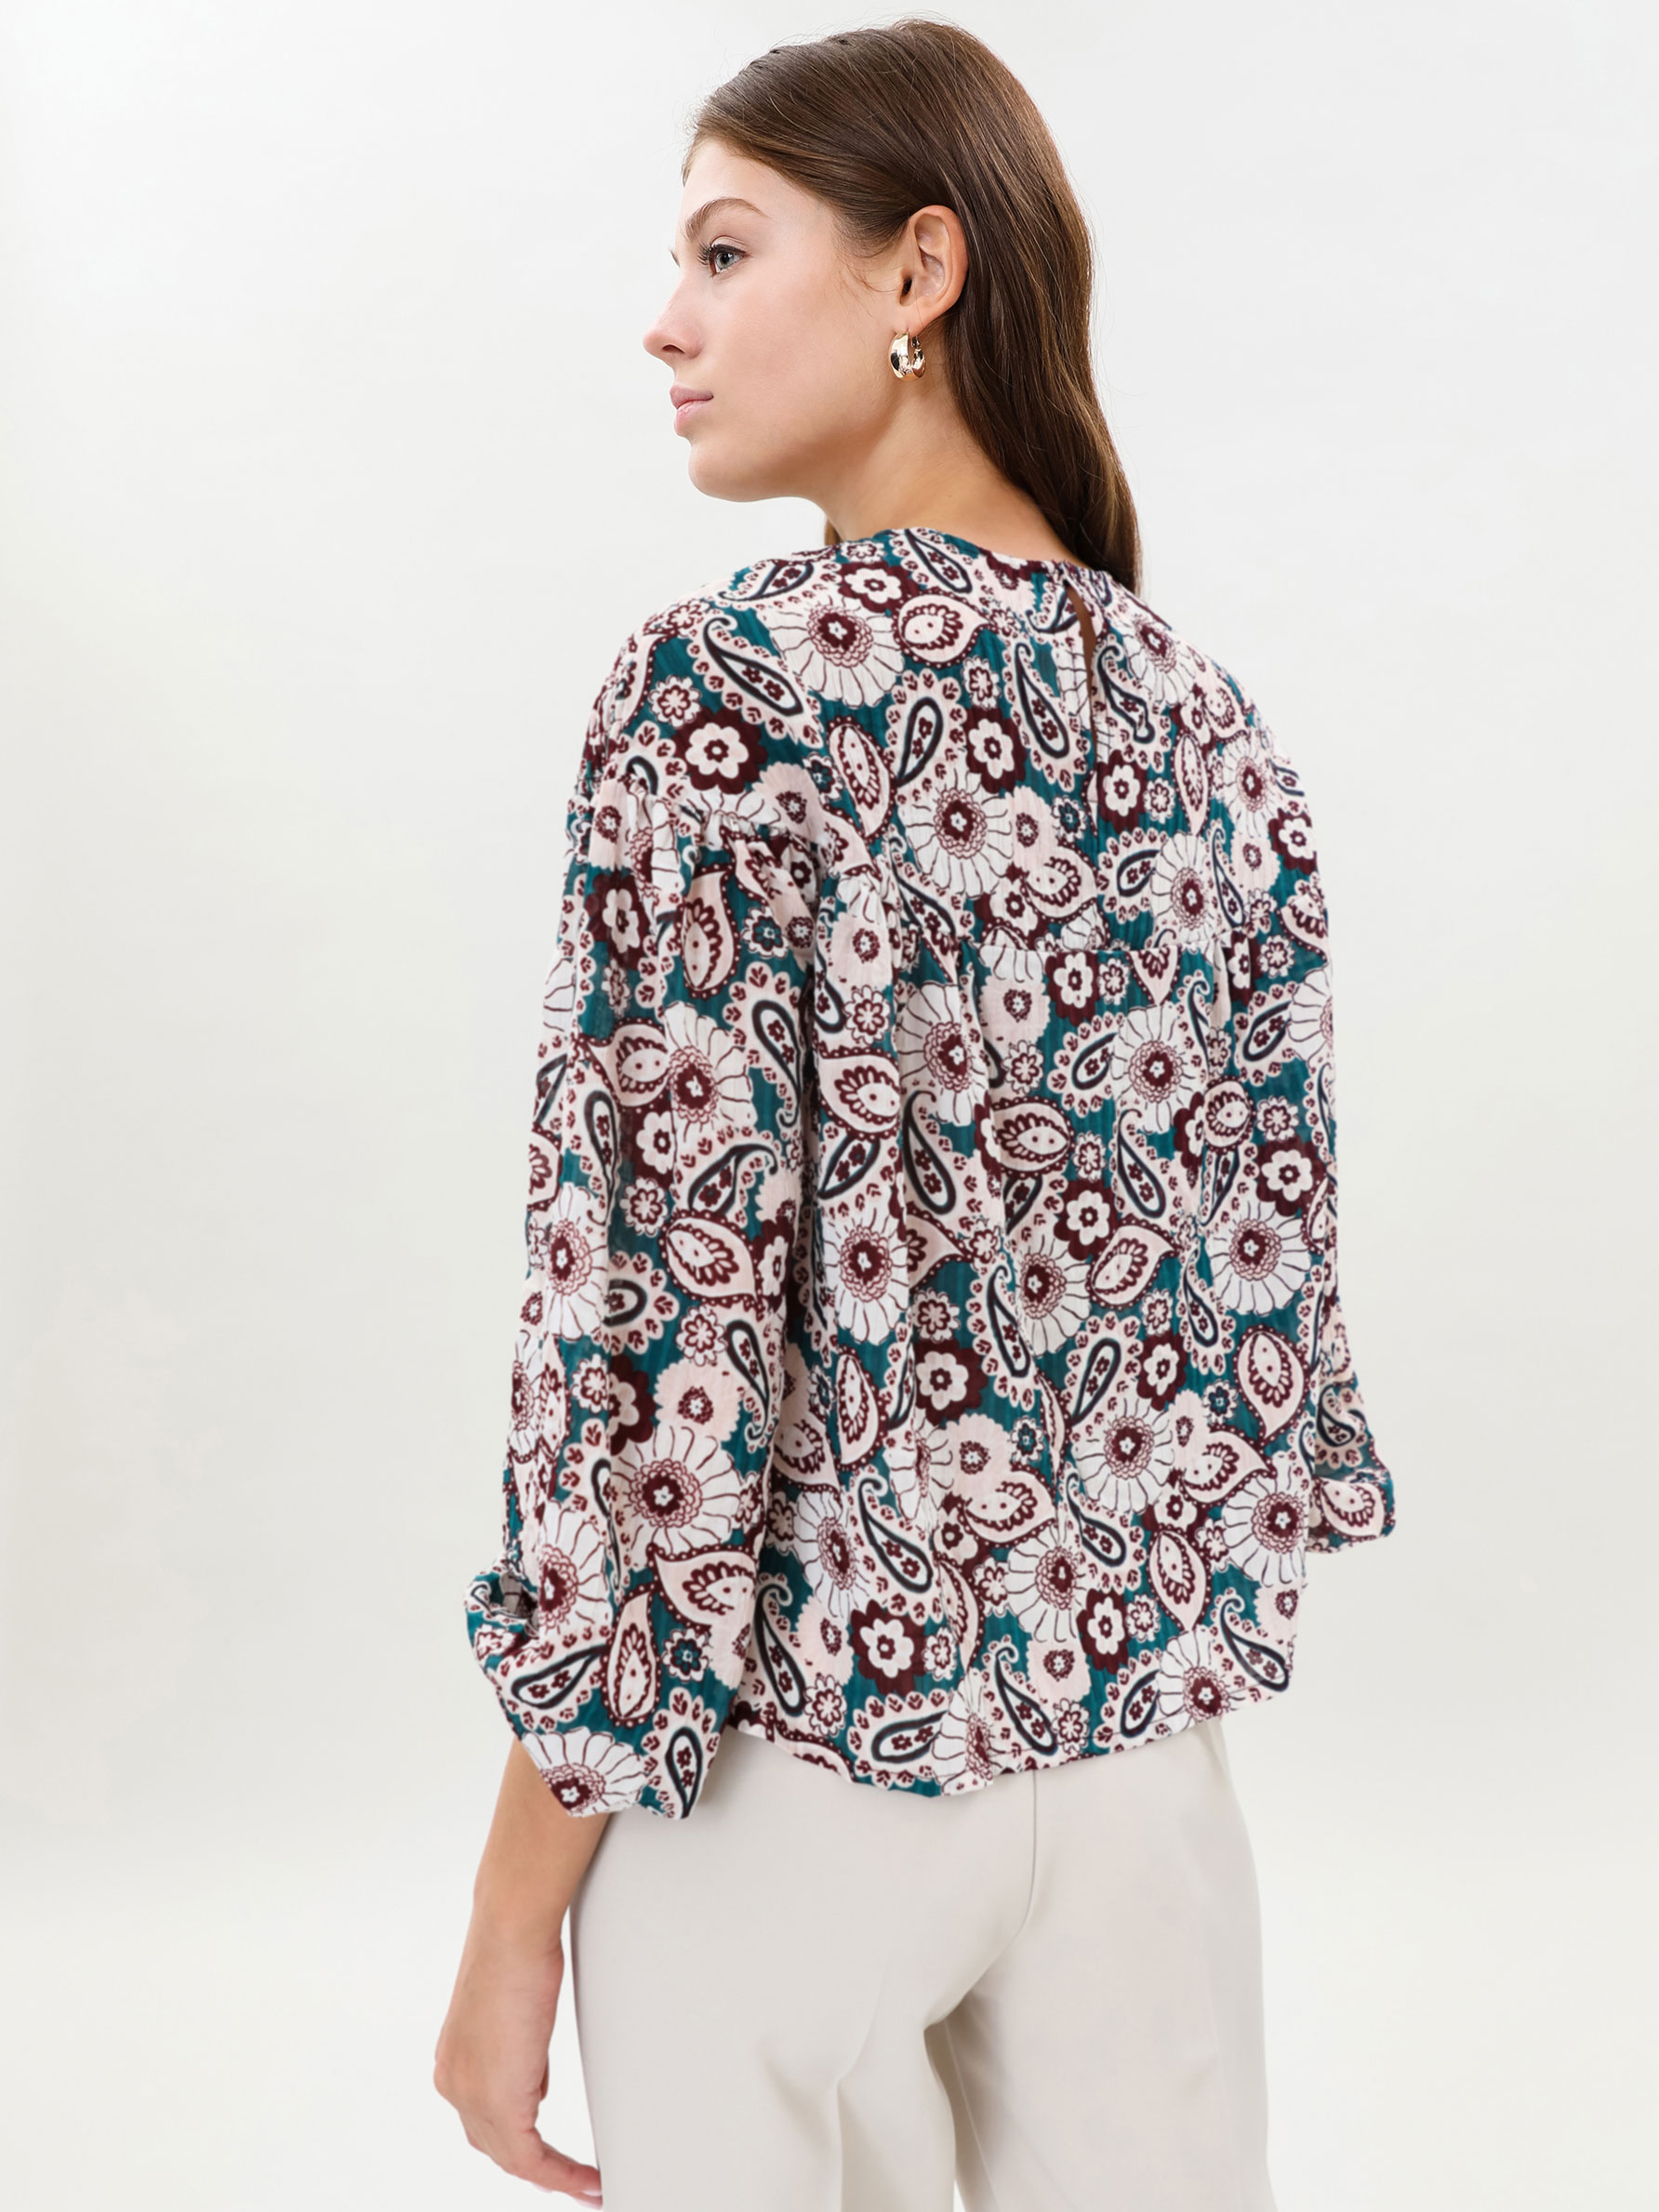 Vogue Women Lady Long Sleeve Asymmetric Print Floral Occident Tops Shirt Blouses